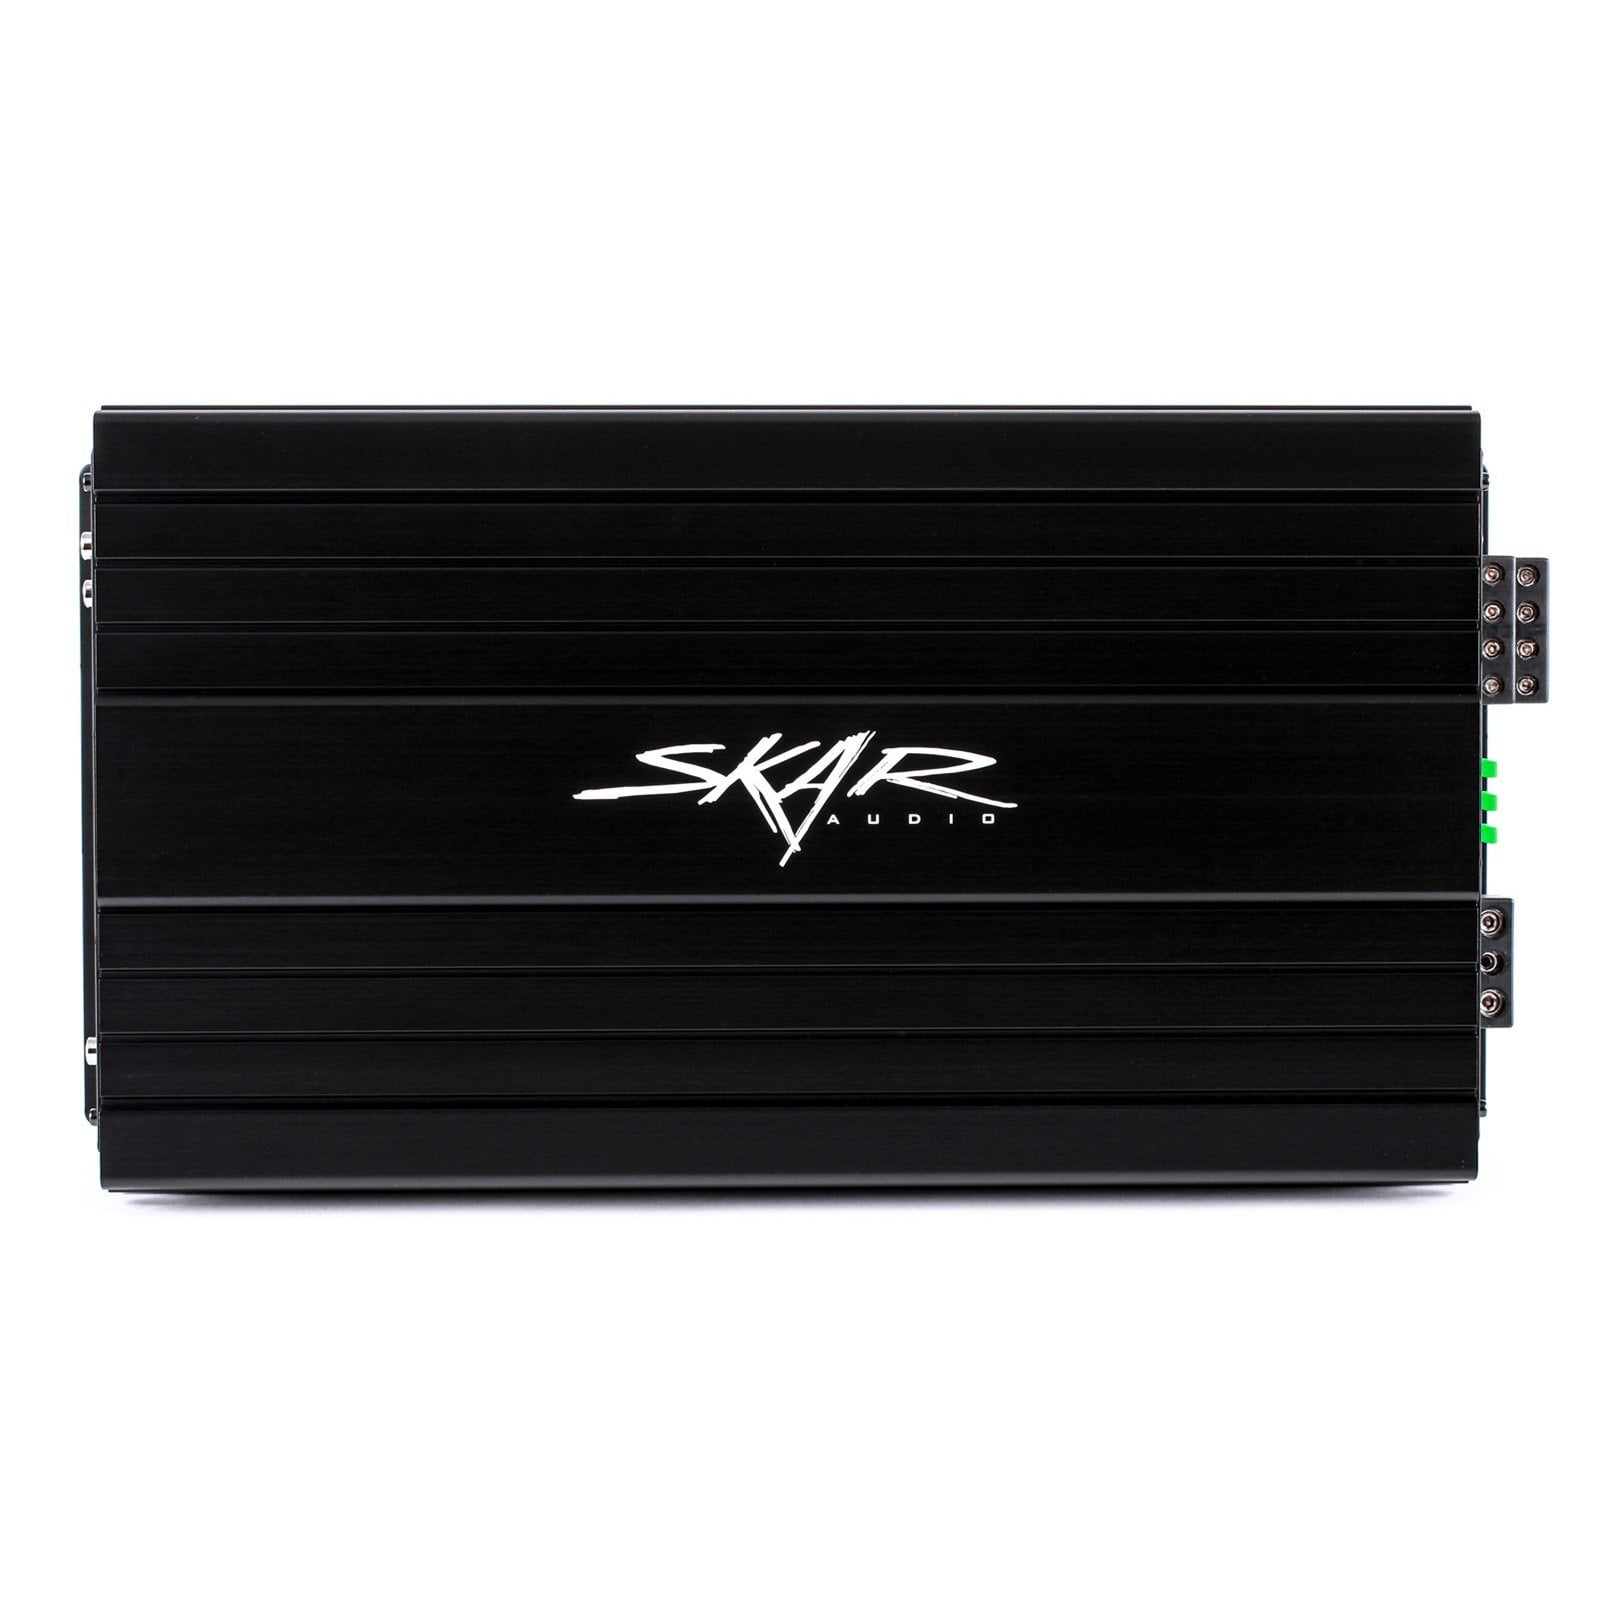 Skar Audio SKv2-100.4AB 800 Watt Class AB 4-Channel Car Amplifier - Front View